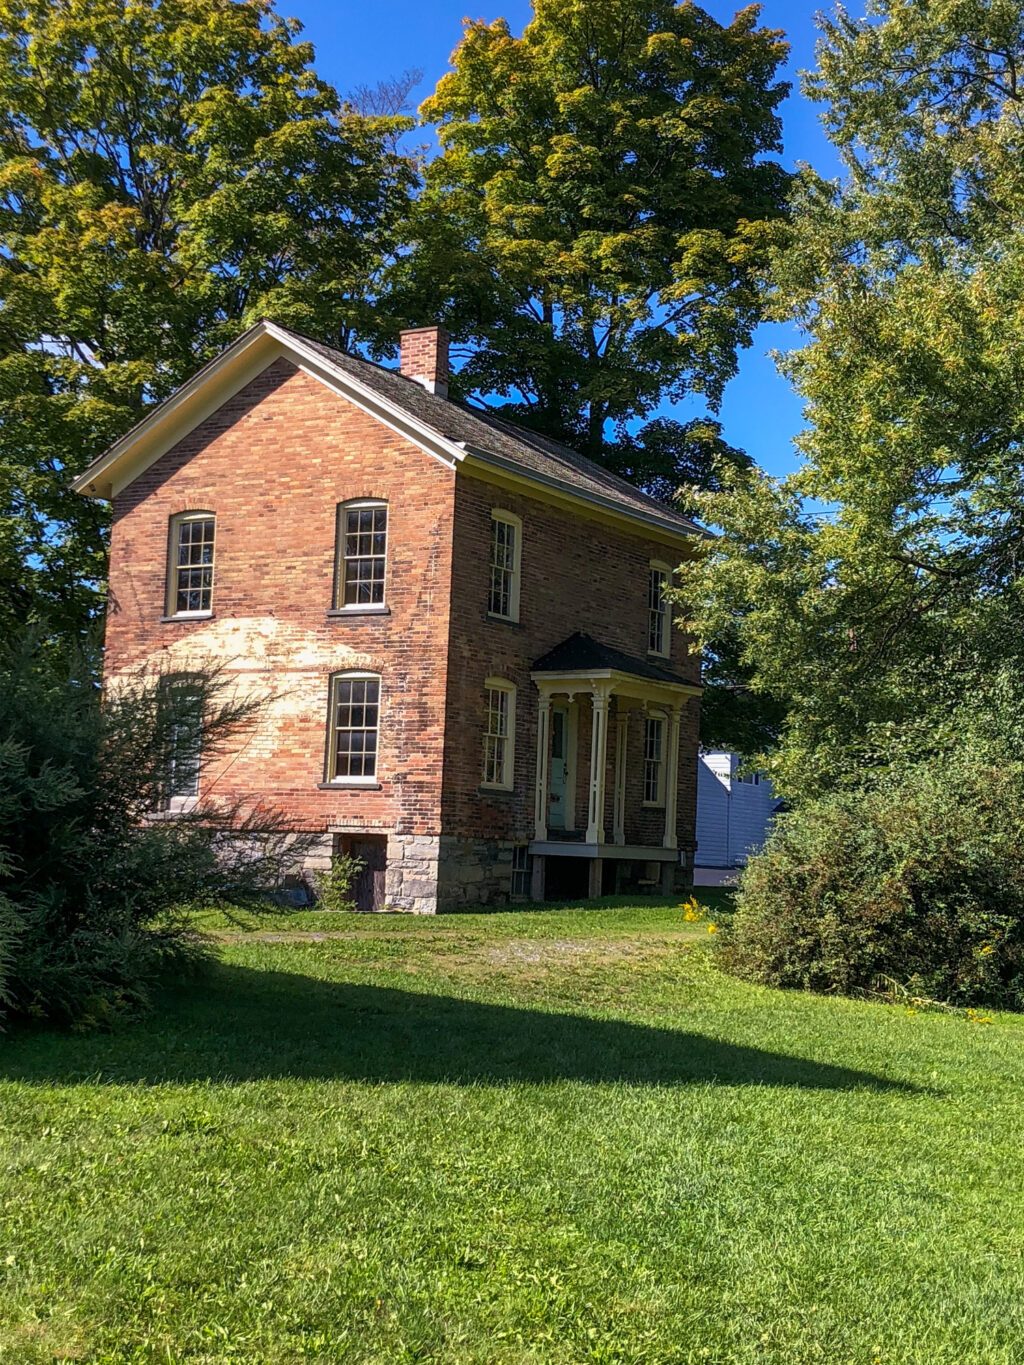 Harriet Tubmans brick home in Auburn NY